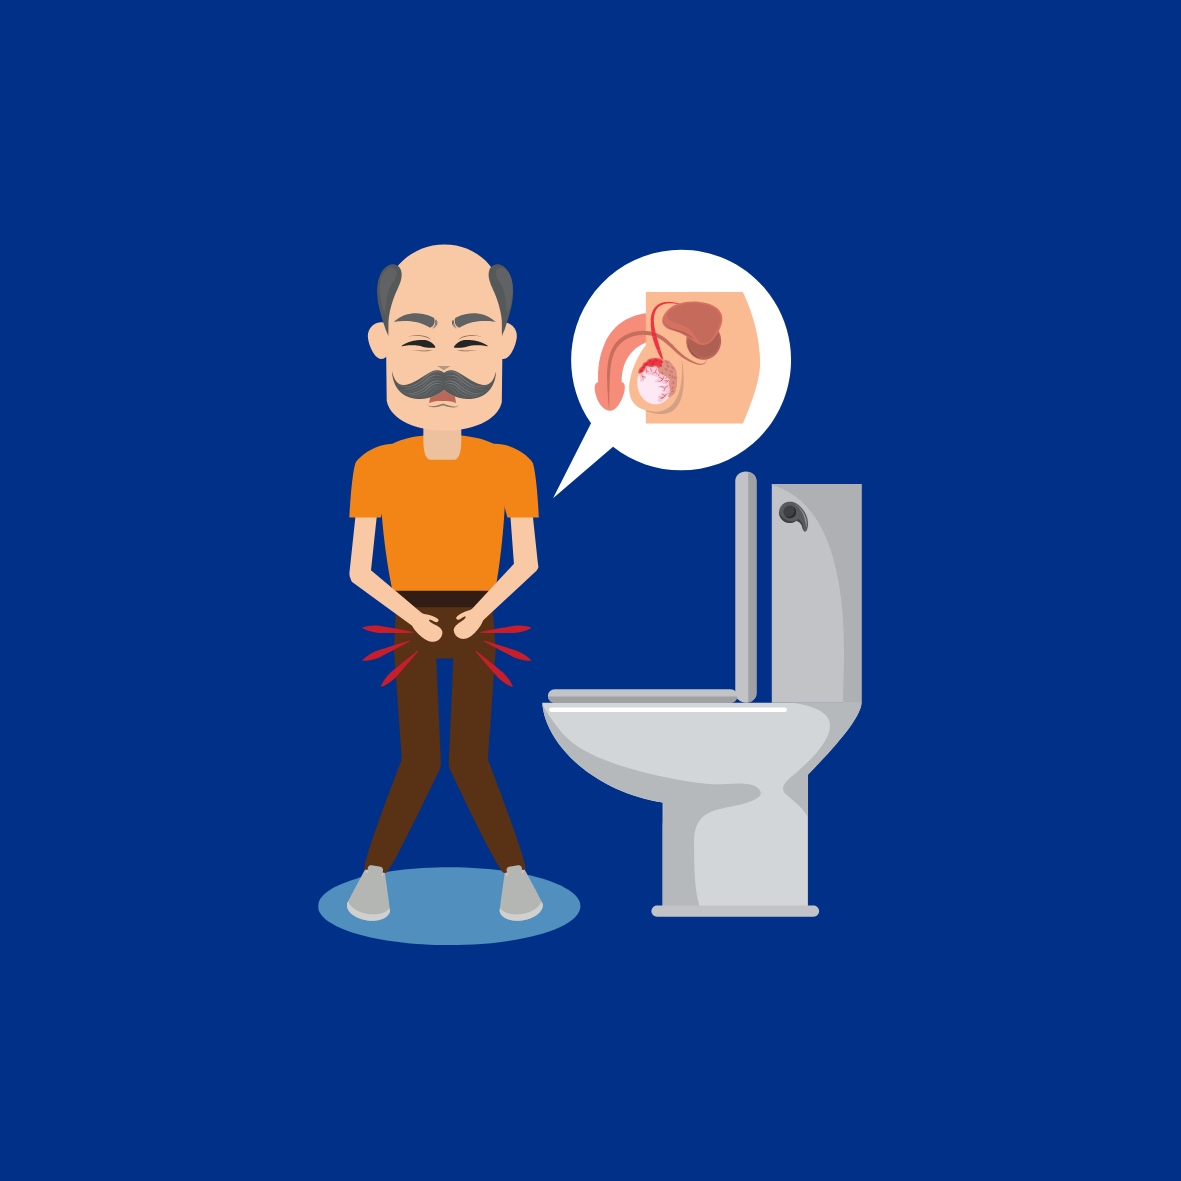 Man stood by toilet with prostate symptoms